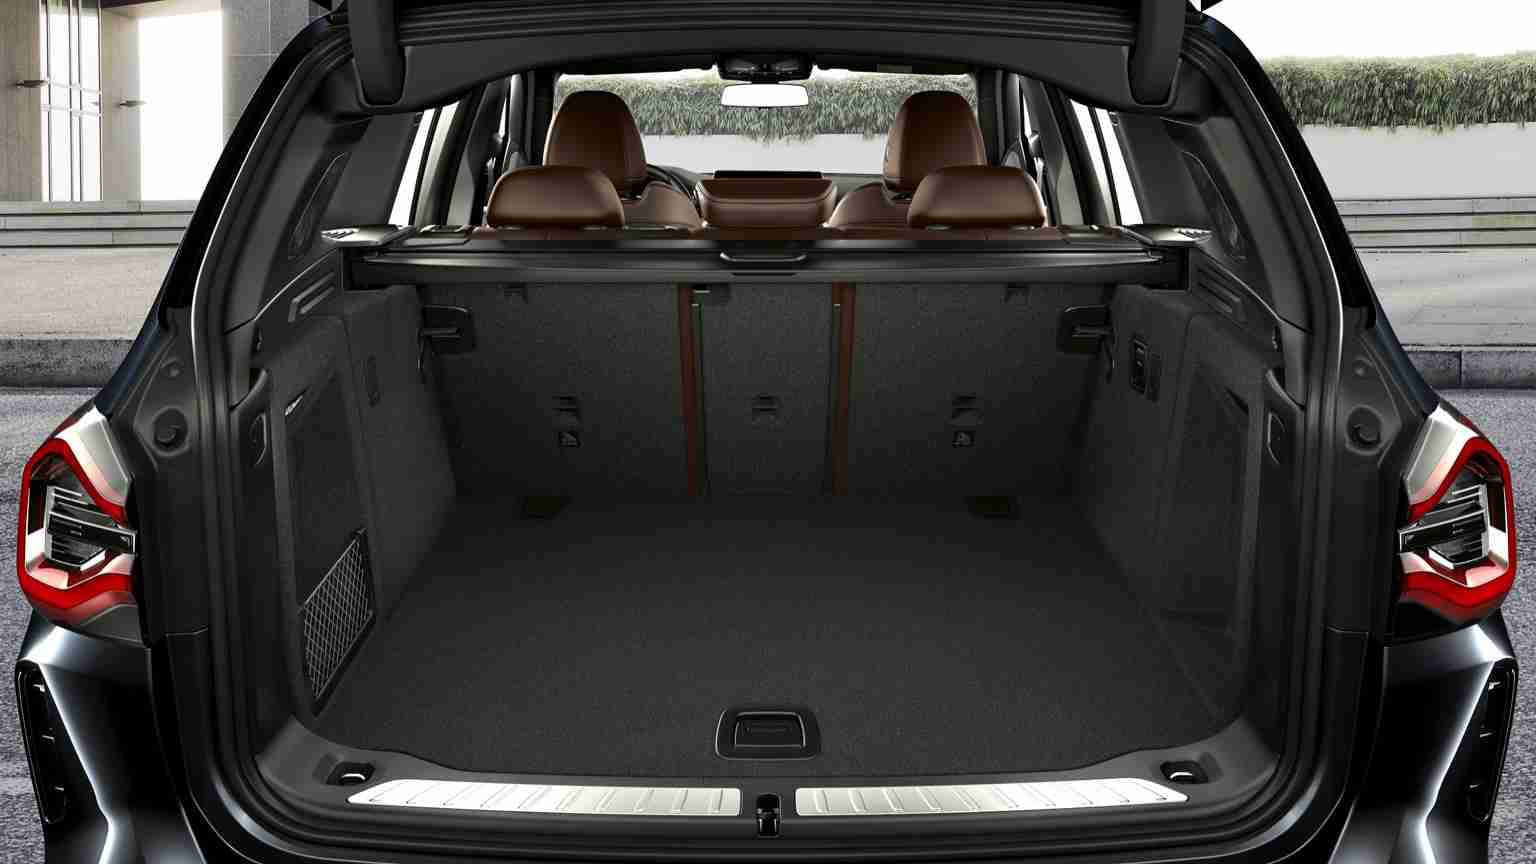 BMW iX3 Interior